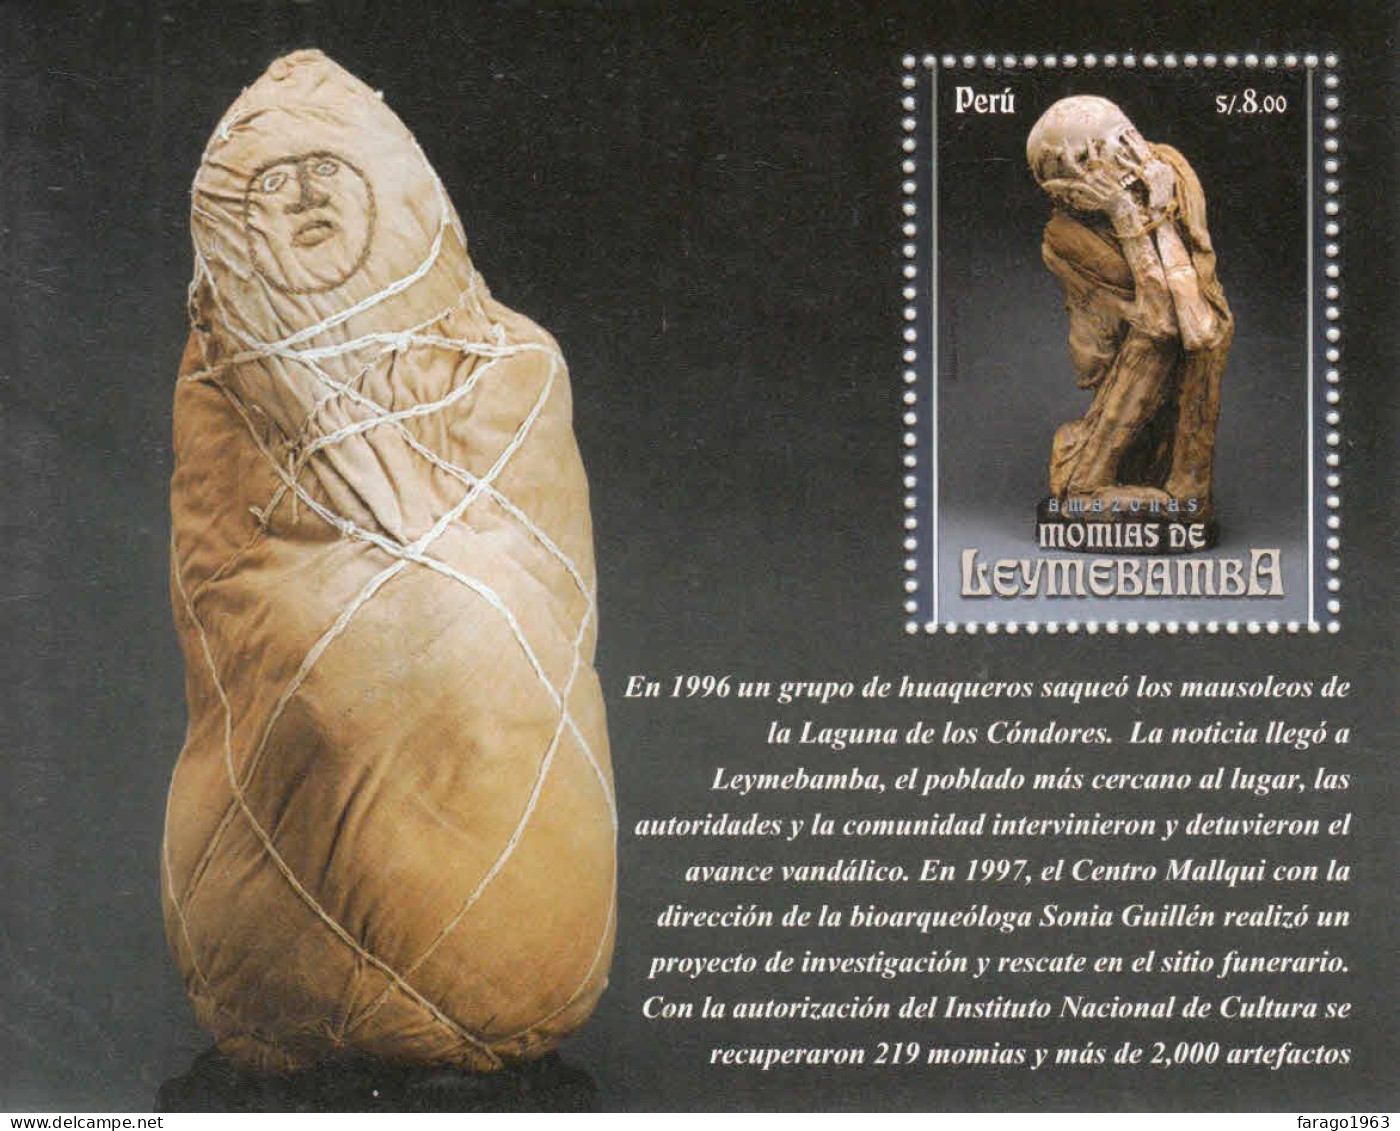 2014 Peru Leymebamba Mummies Archaeology  Souvenir Sheet MNH - Peru